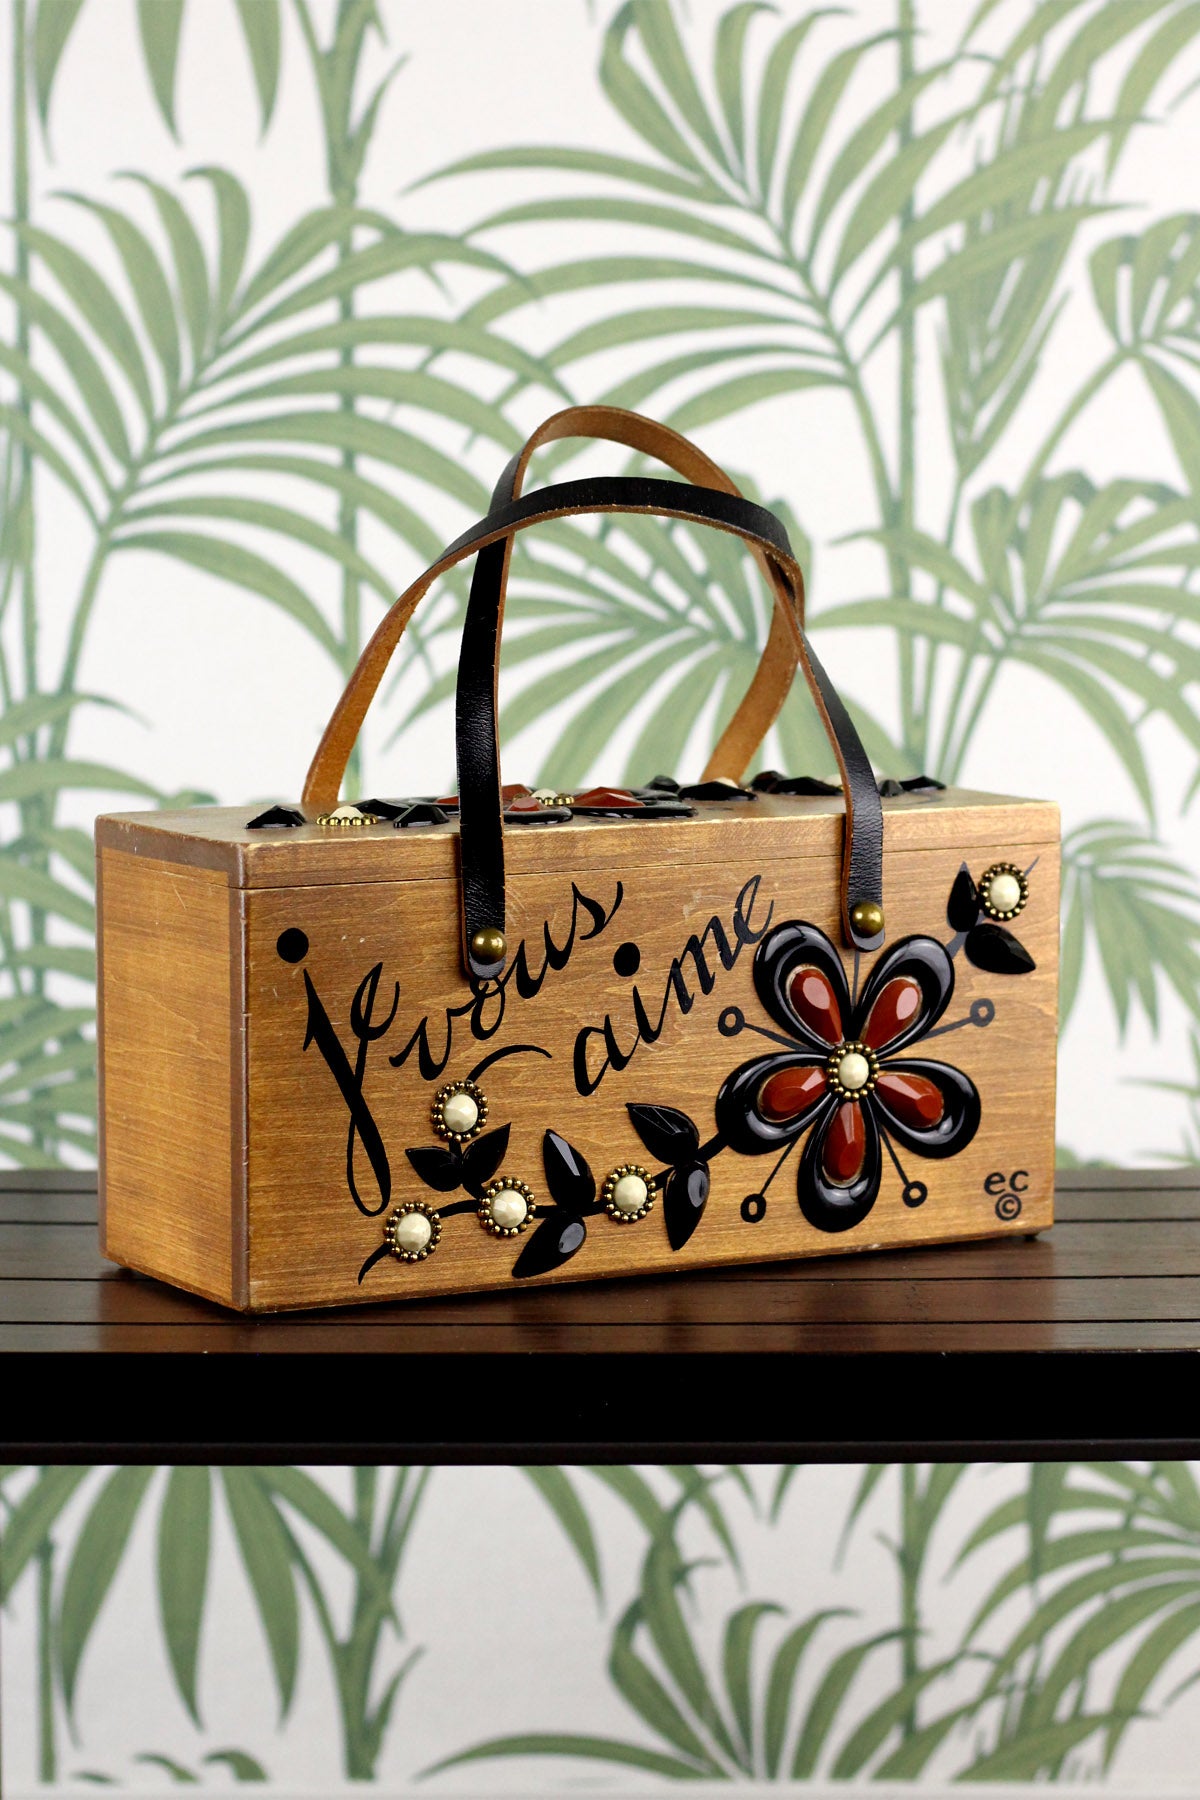 Vintage Box Purse / Enid Collins / Mushrooms / Original Box Bag / Wood Box  / Purse / Storage / Home Decor / Train Case / Jewelry Box